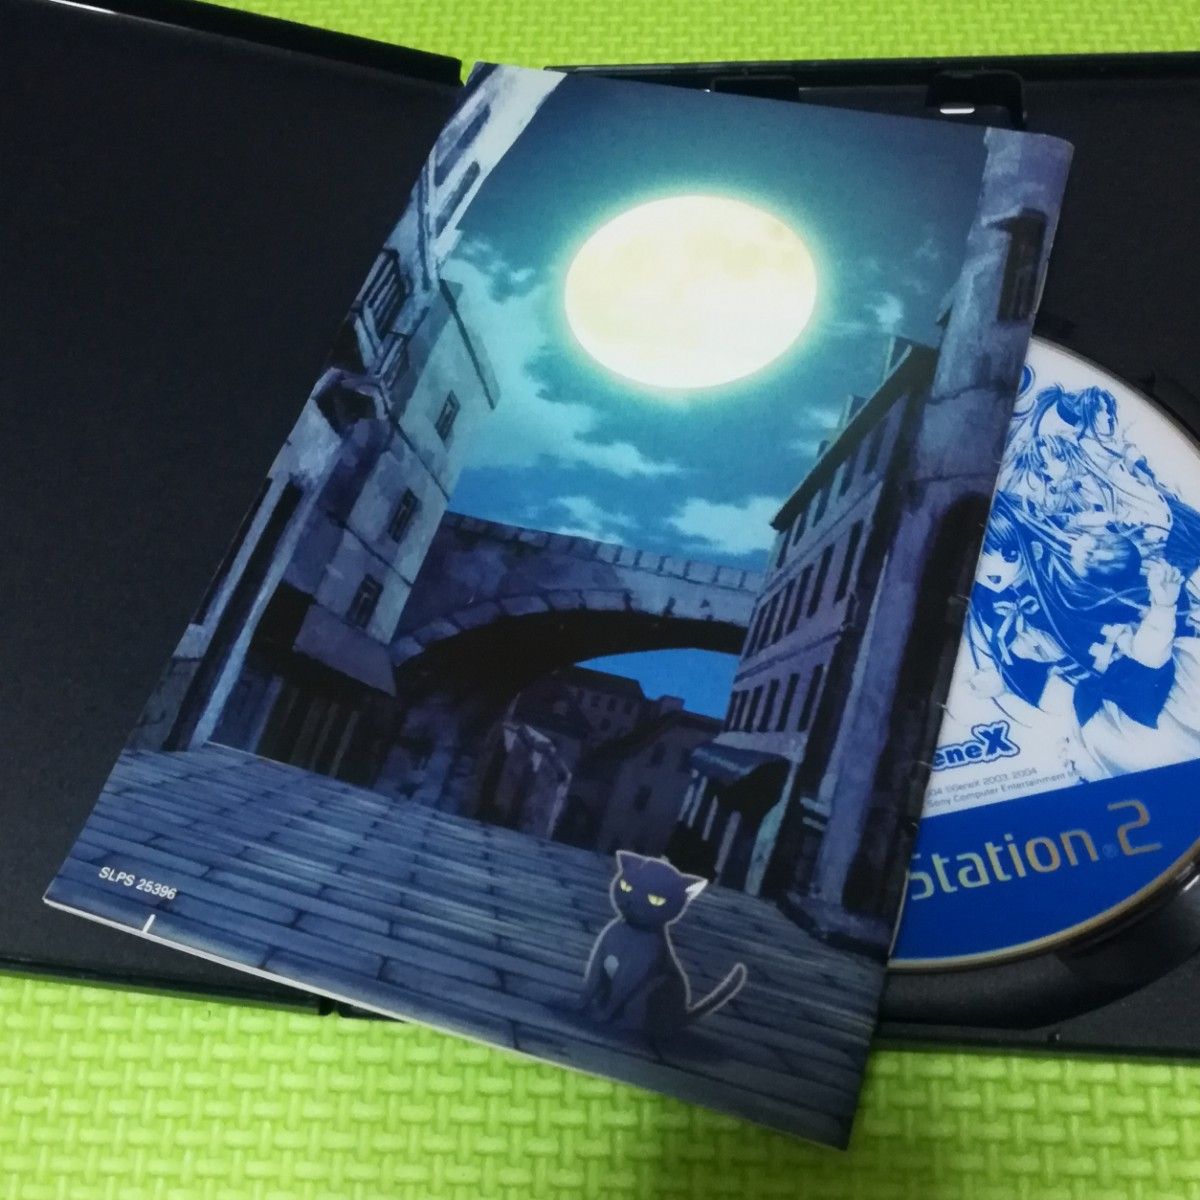 PS2 ファンタスティックフォーチュン2 トリプルスター　プレステ2 ソフト　恋愛シミュレーション　乙女ゲーム